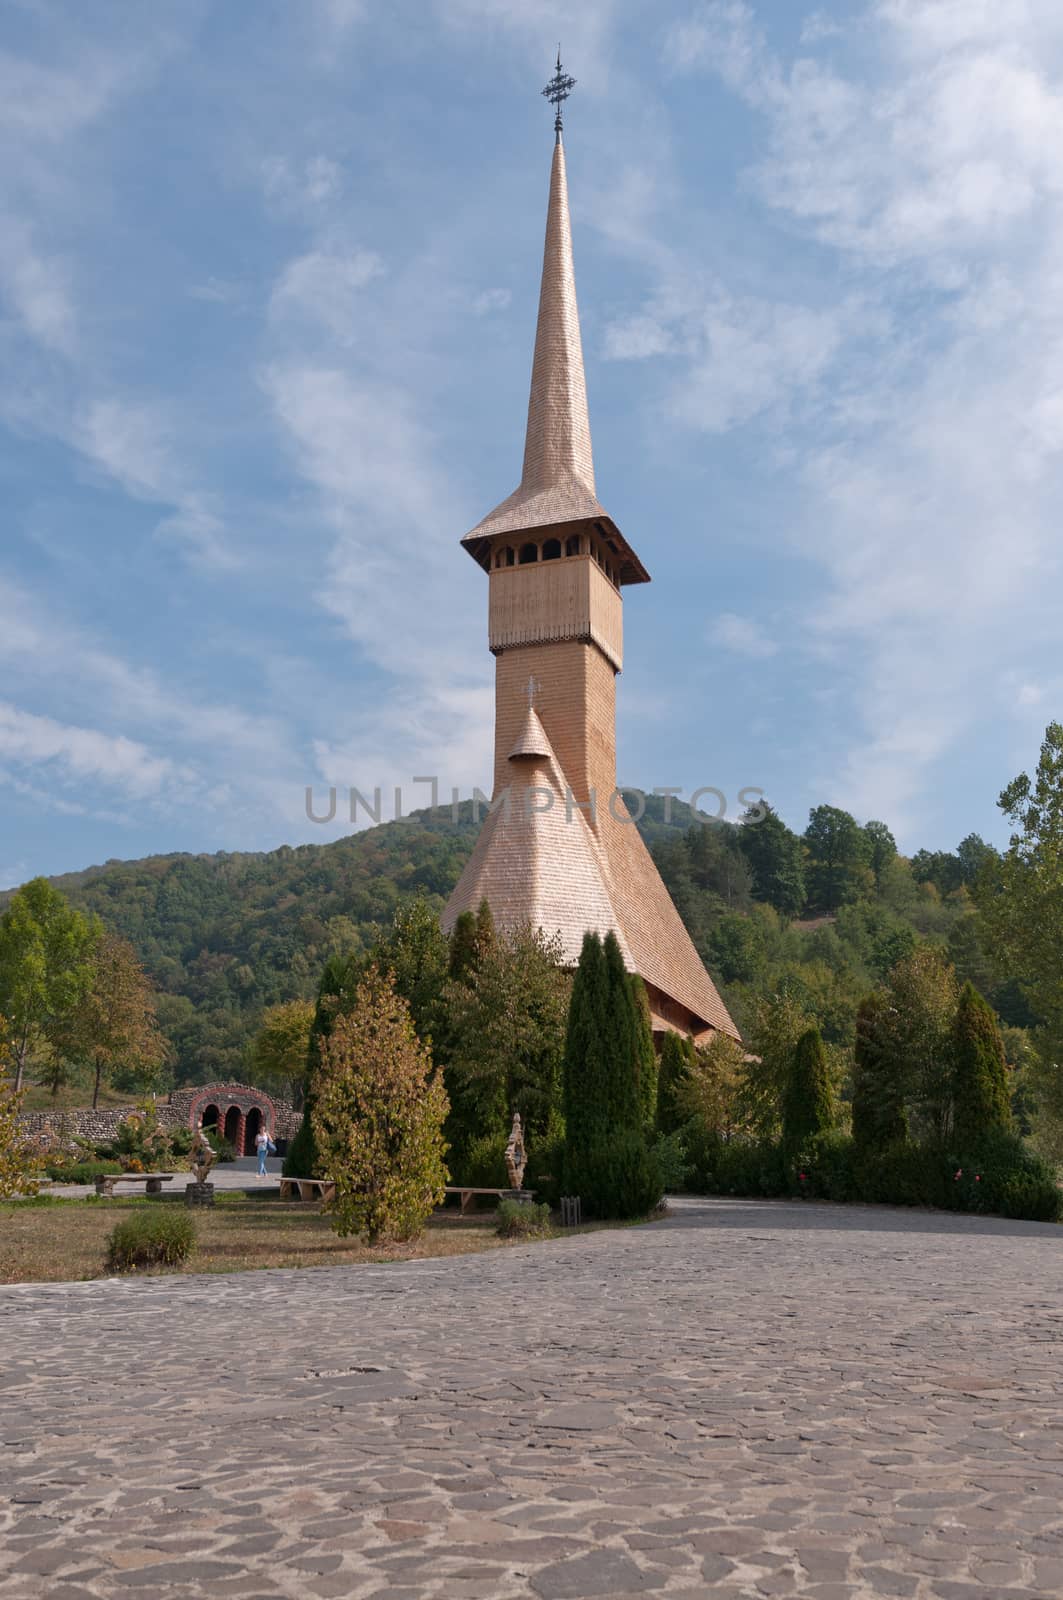 Barsana monastery, one of the main tourist attractions in Maramures, Romania.